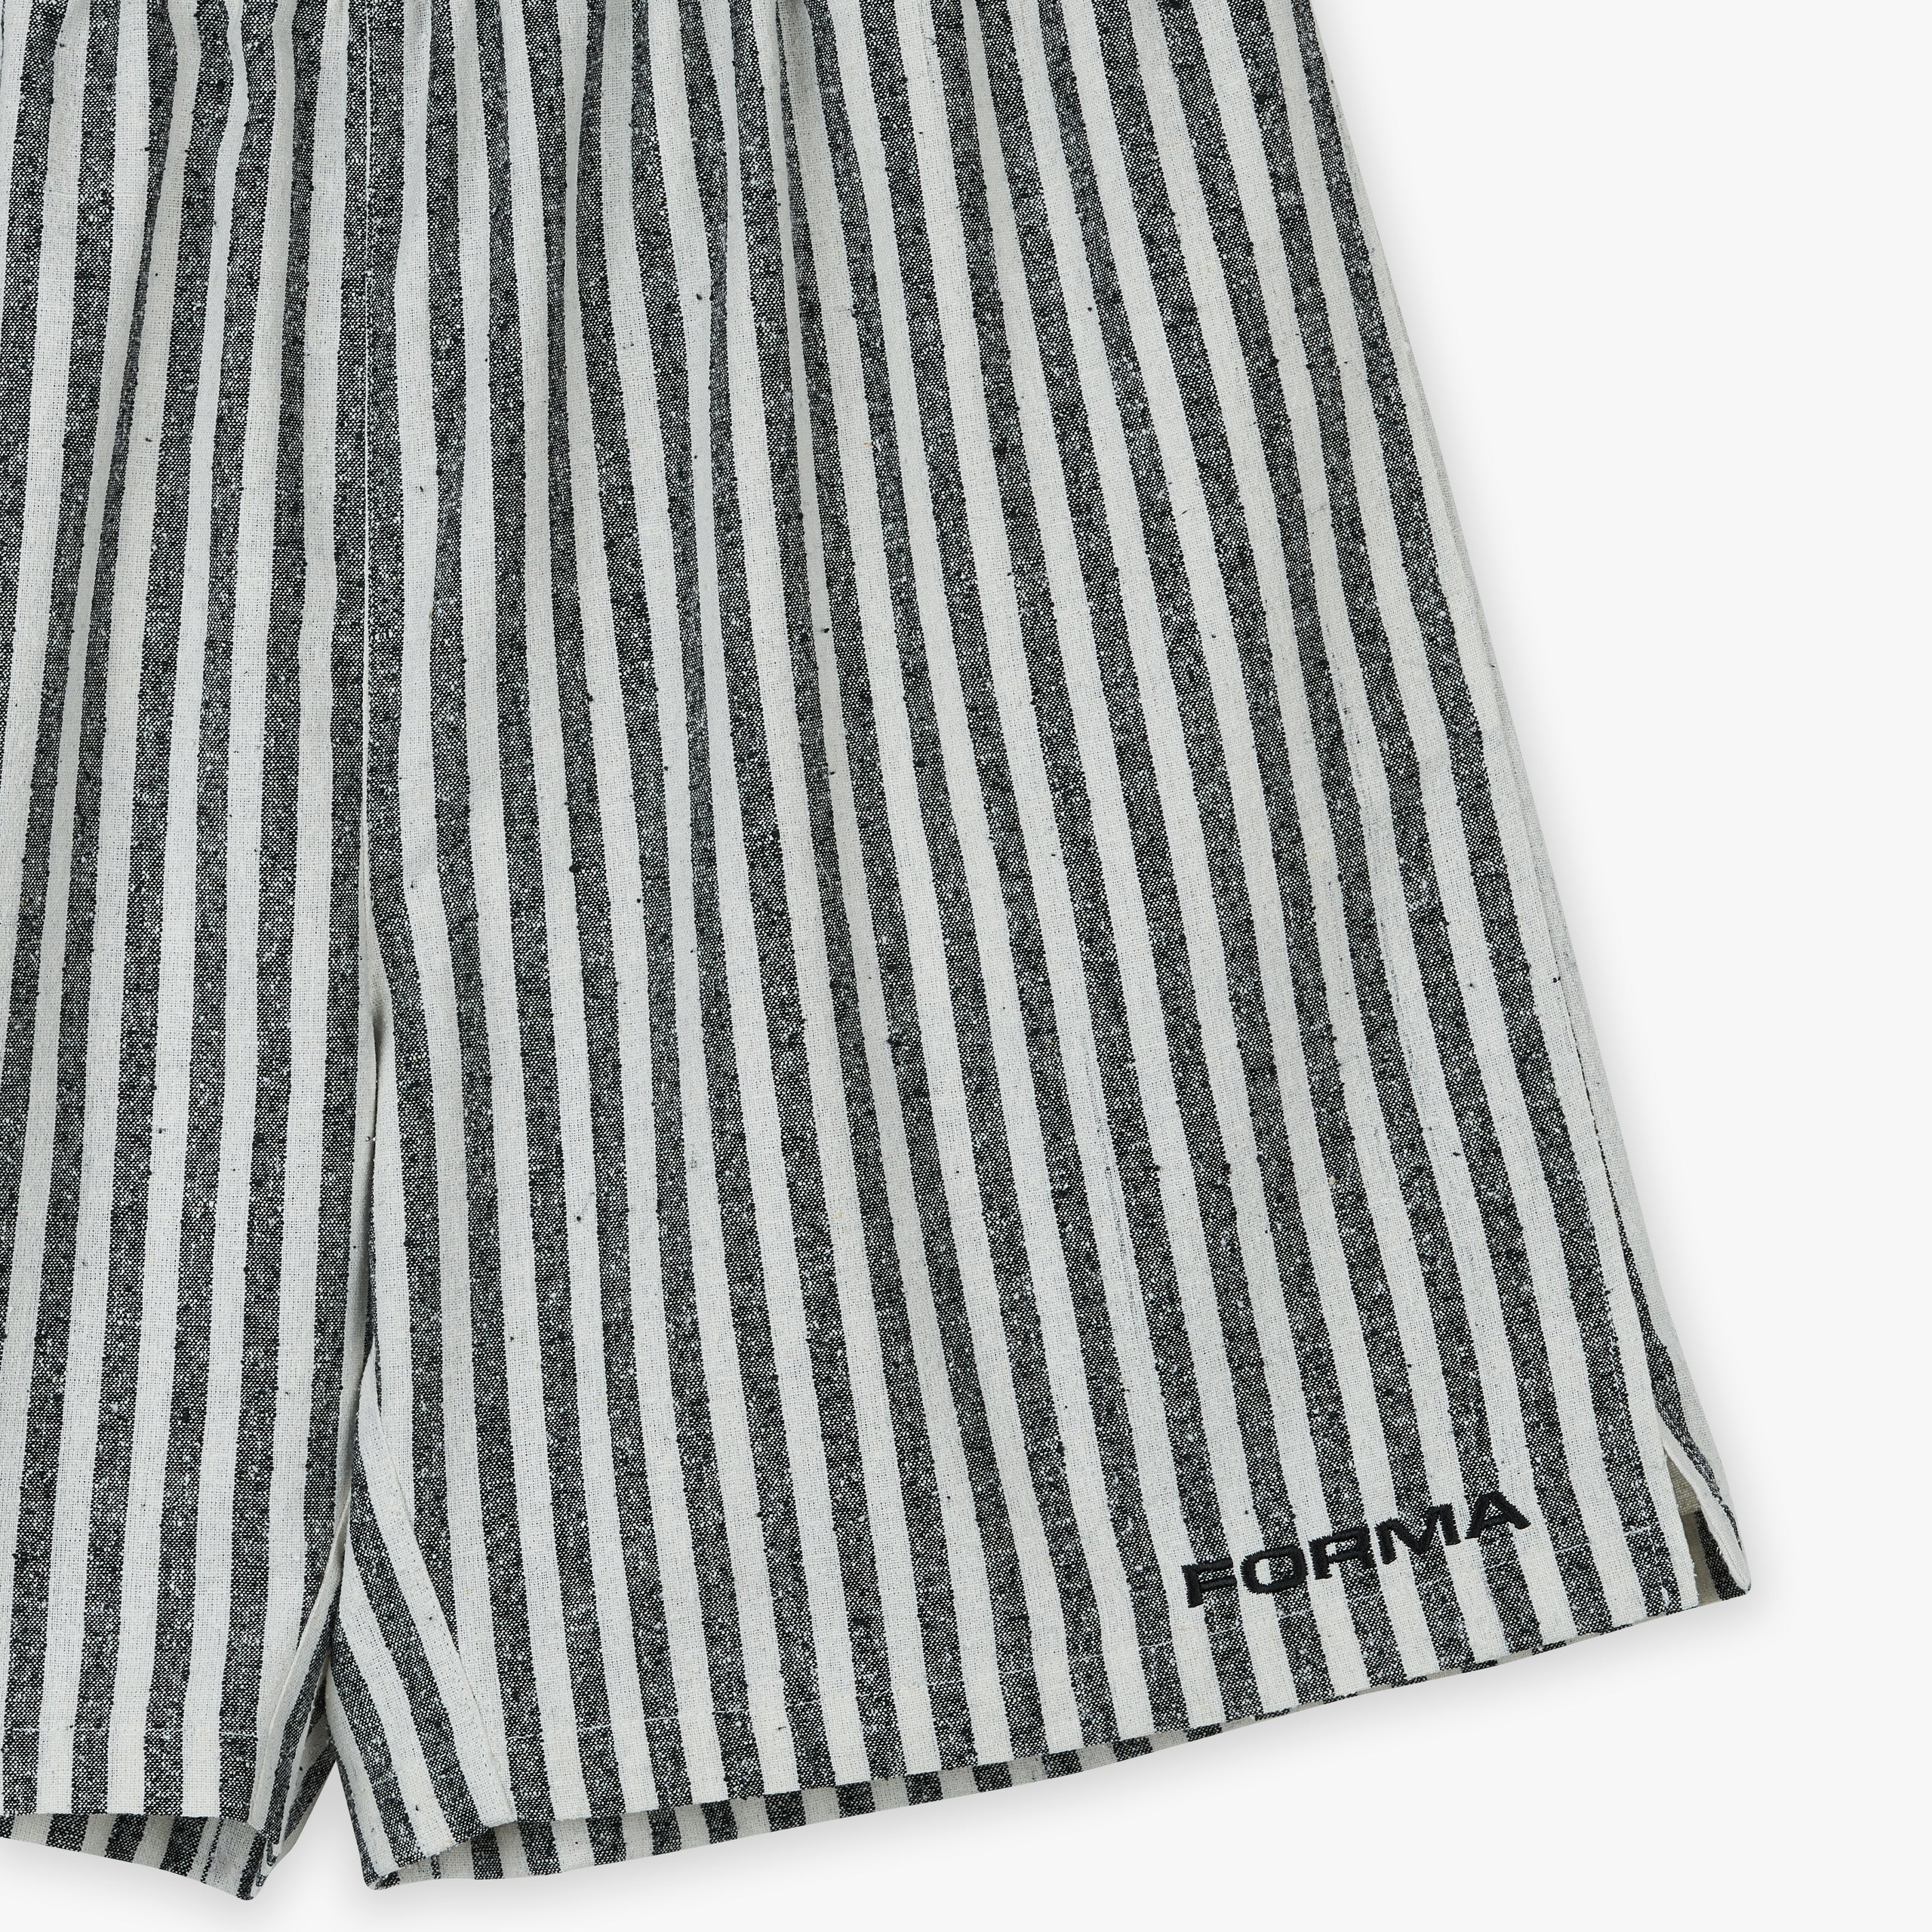 Forma striped silk shorts